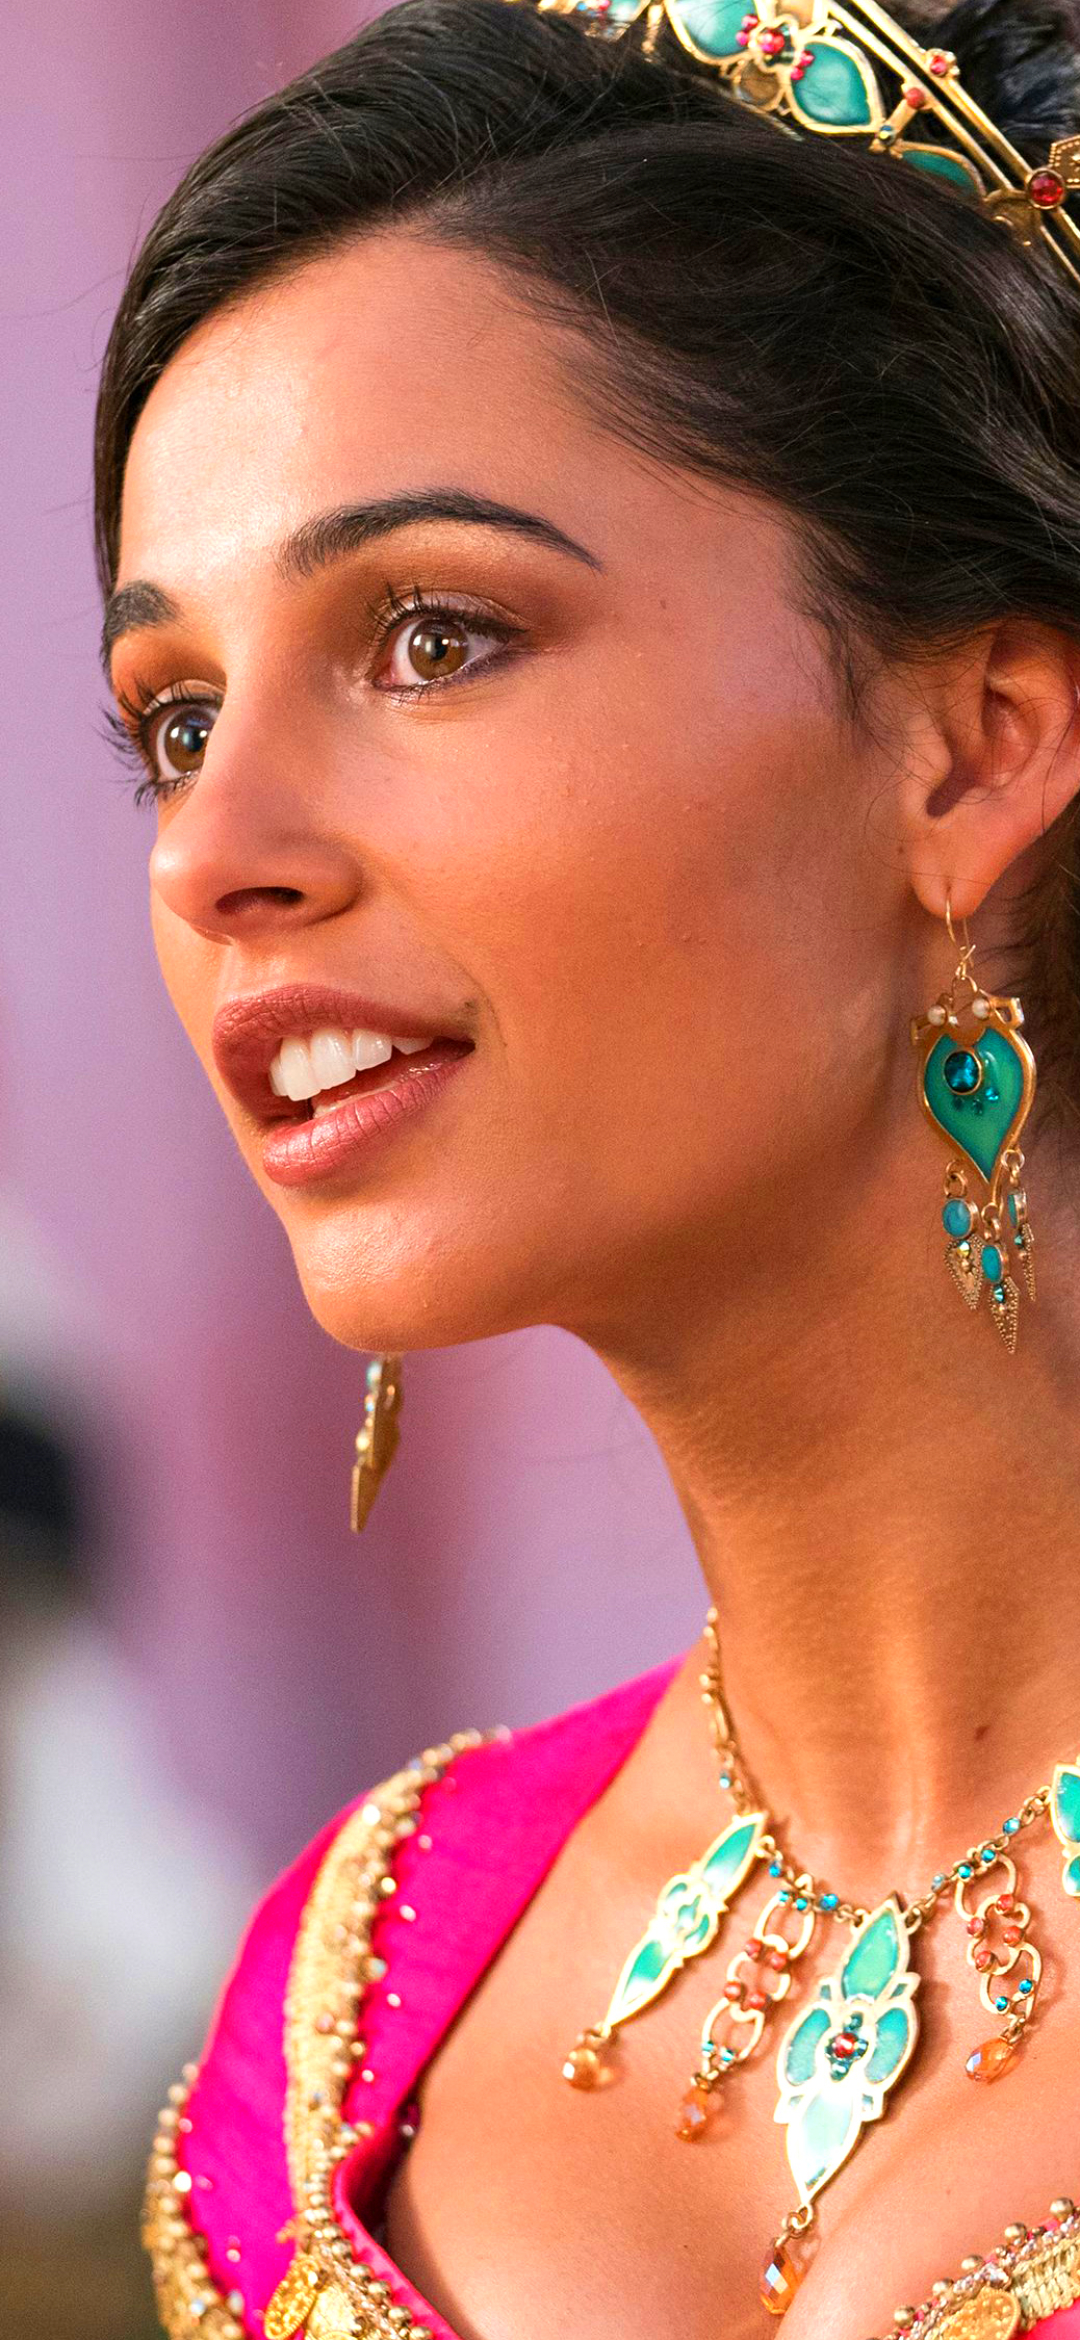 movie, aladdin (2019), face, brown eyes, necklace, naomi scott, actress, earrings, british, black hair